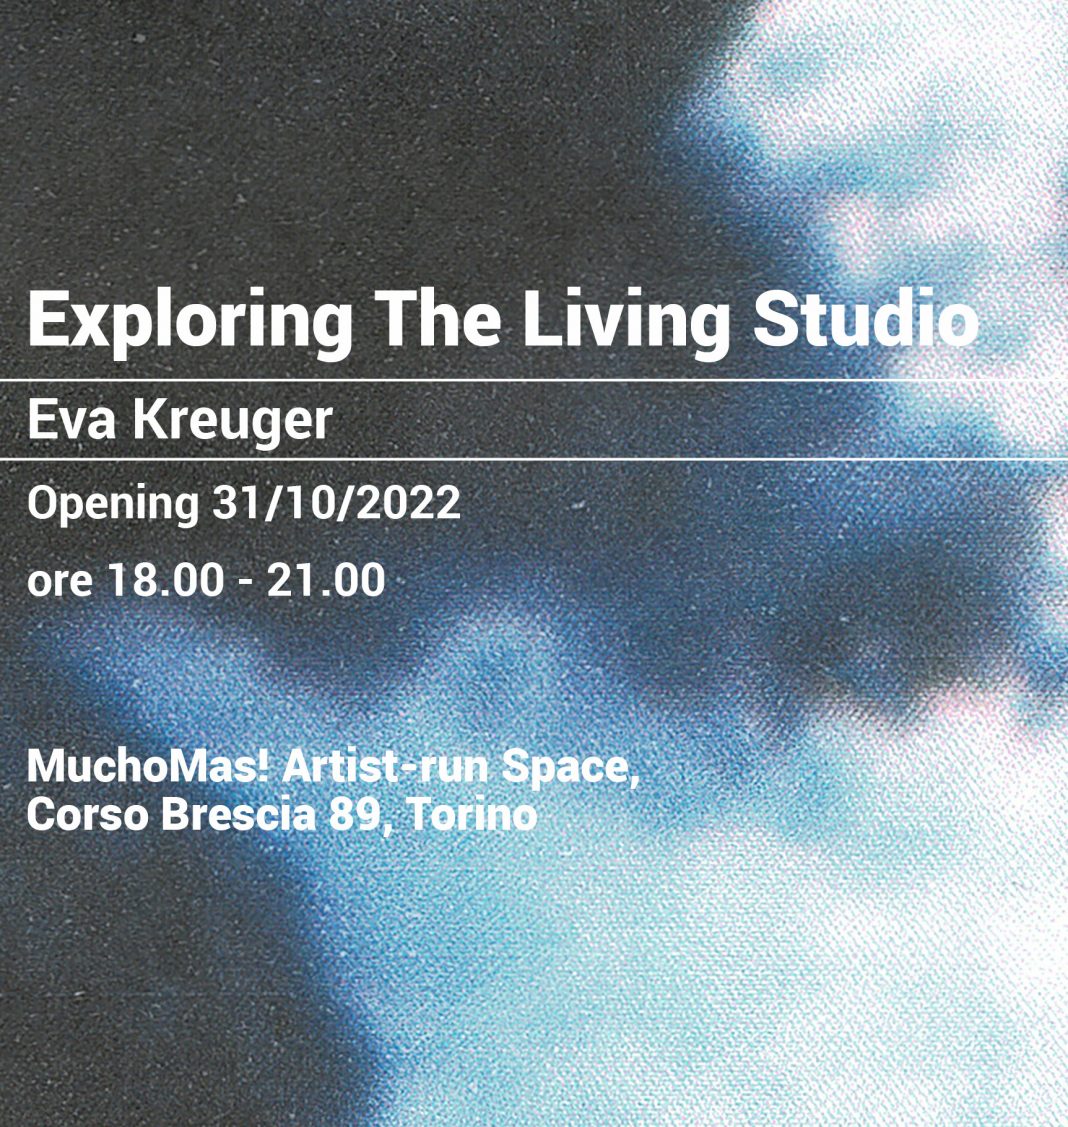 Exploring The Living Studiohttps://www.exibart.com/repository/media/formidable/11/img/0c8/Eva-Kreuger-exibart-copia-1068x1127.jpg